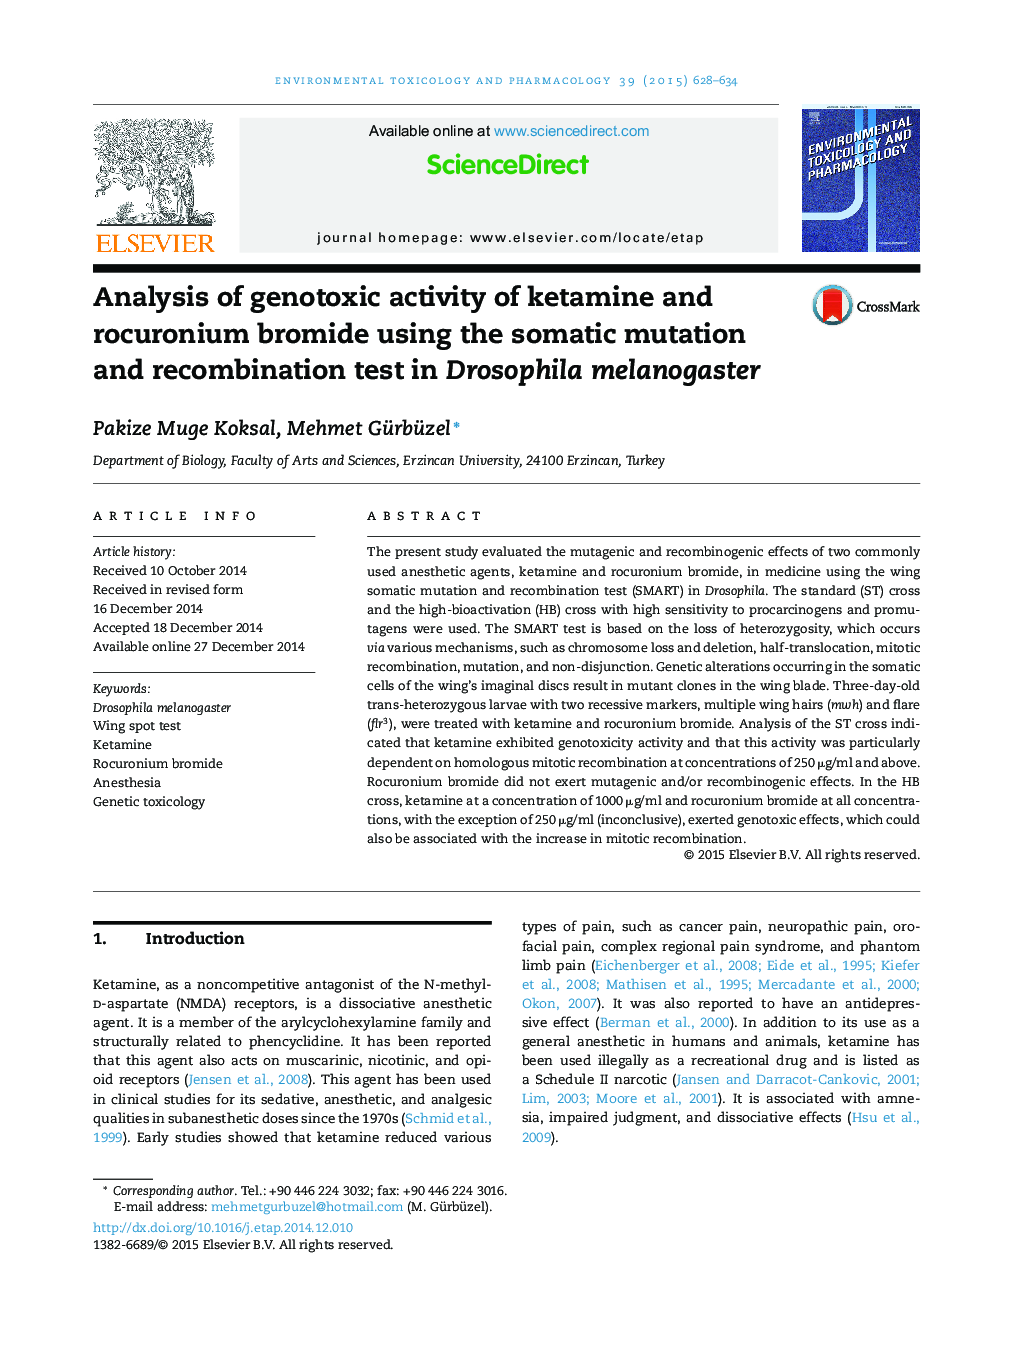 Analysis of genotoxic activity of ketamine and rocuronium bromide using the somatic mutation and recombination test in Drosophila melanogaster